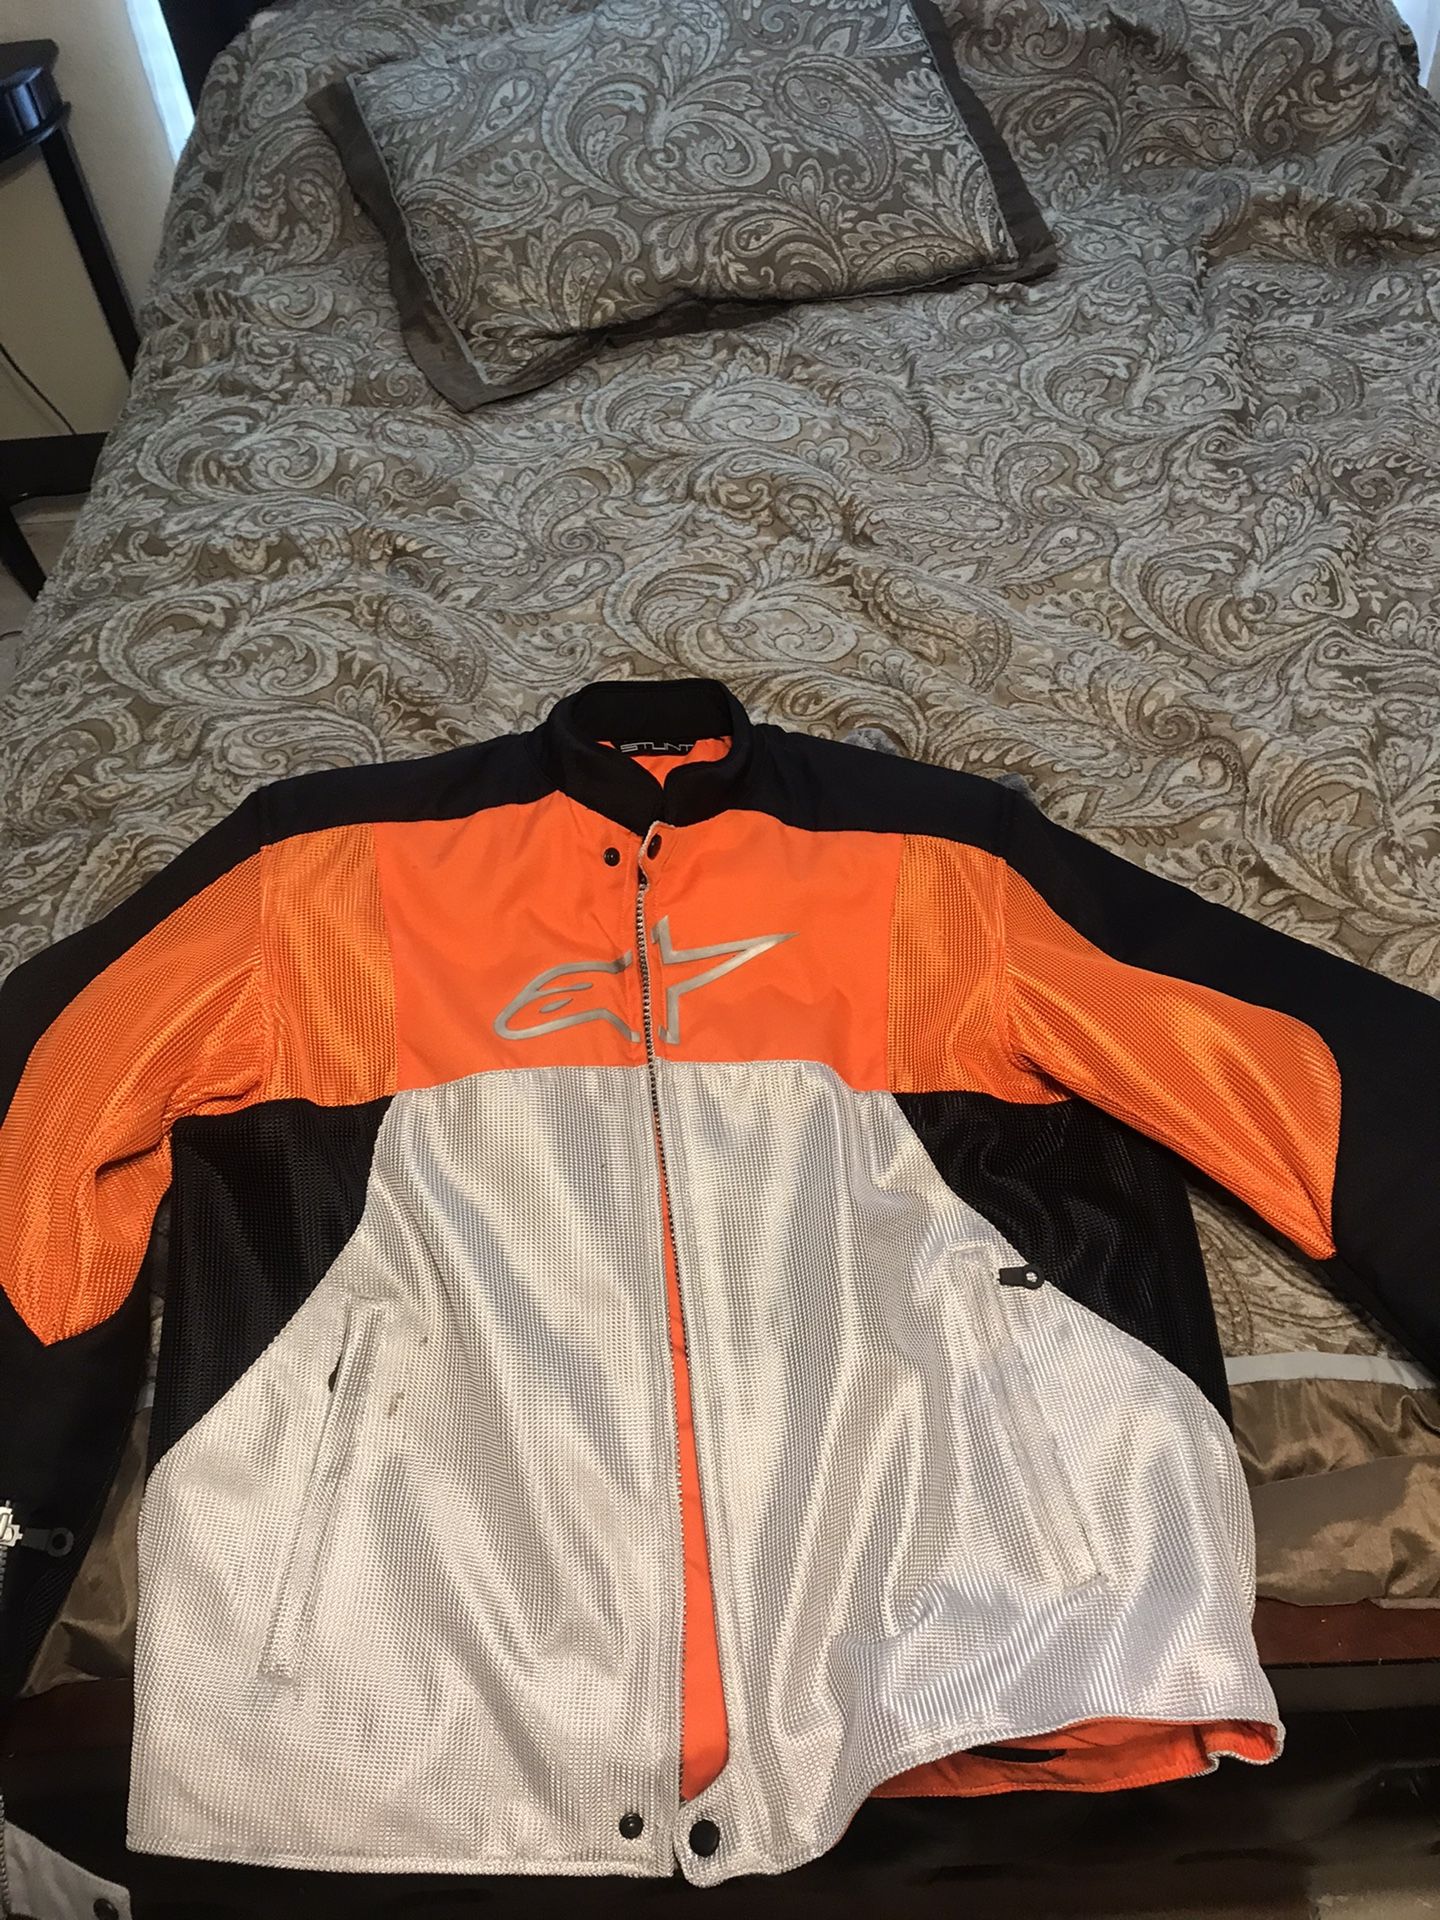 Alpine star motorcycle jacket